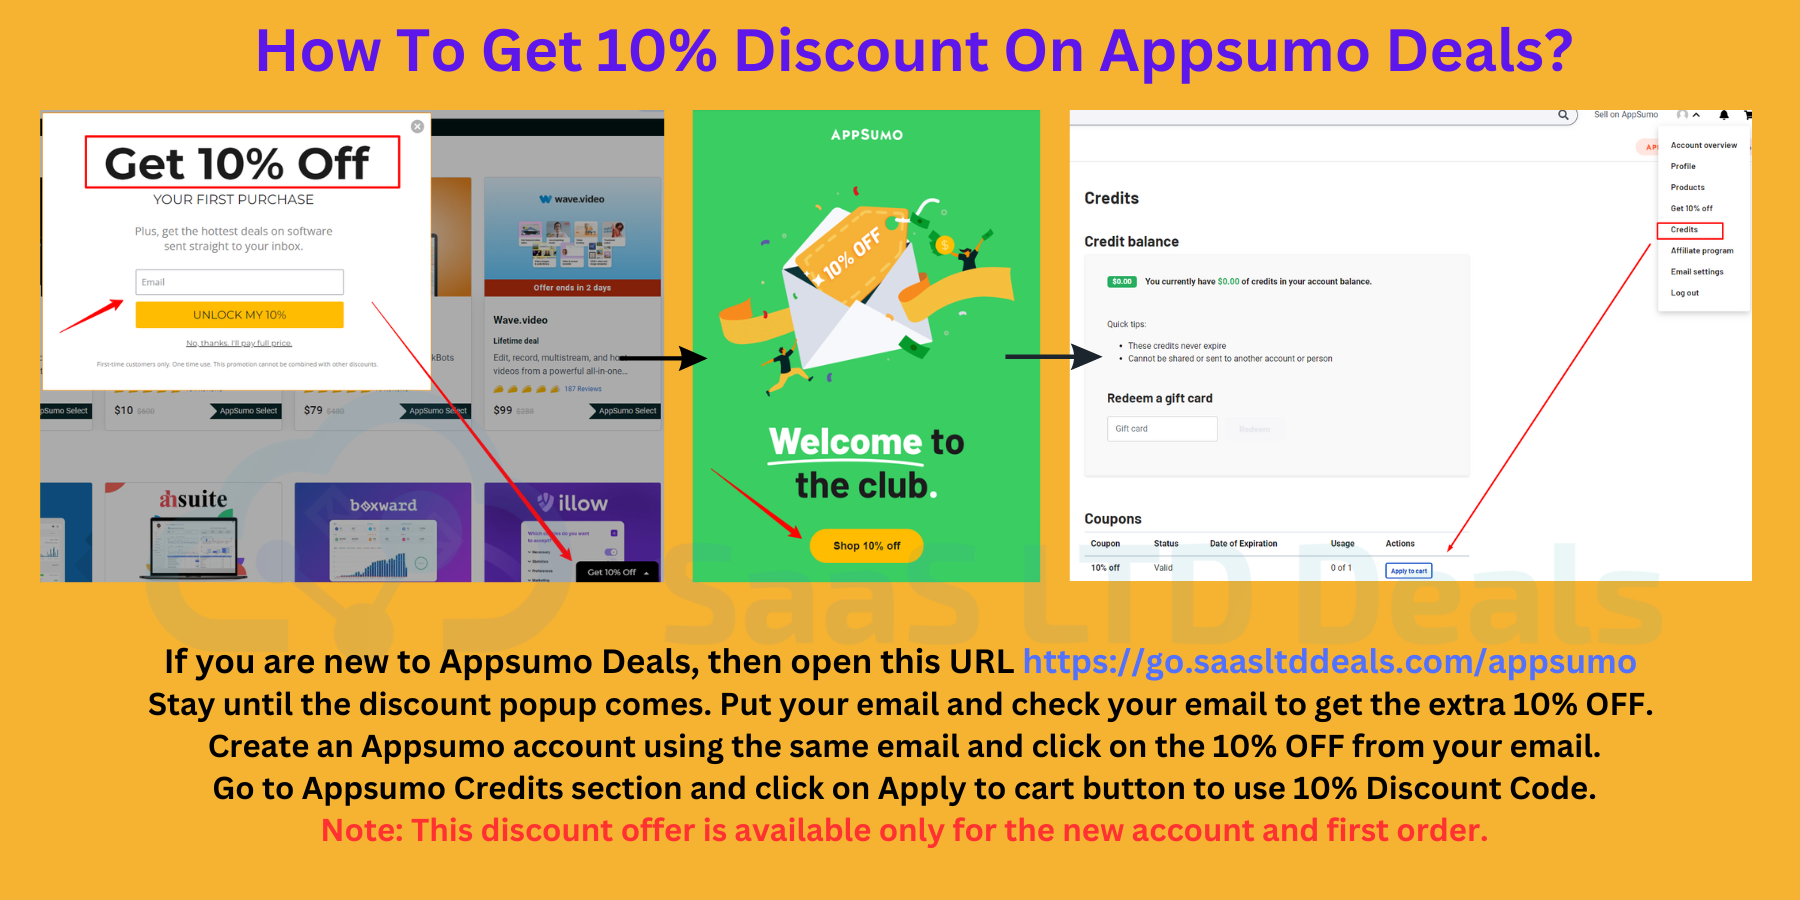 How To Get 10% Discount On Appsumo Deals?